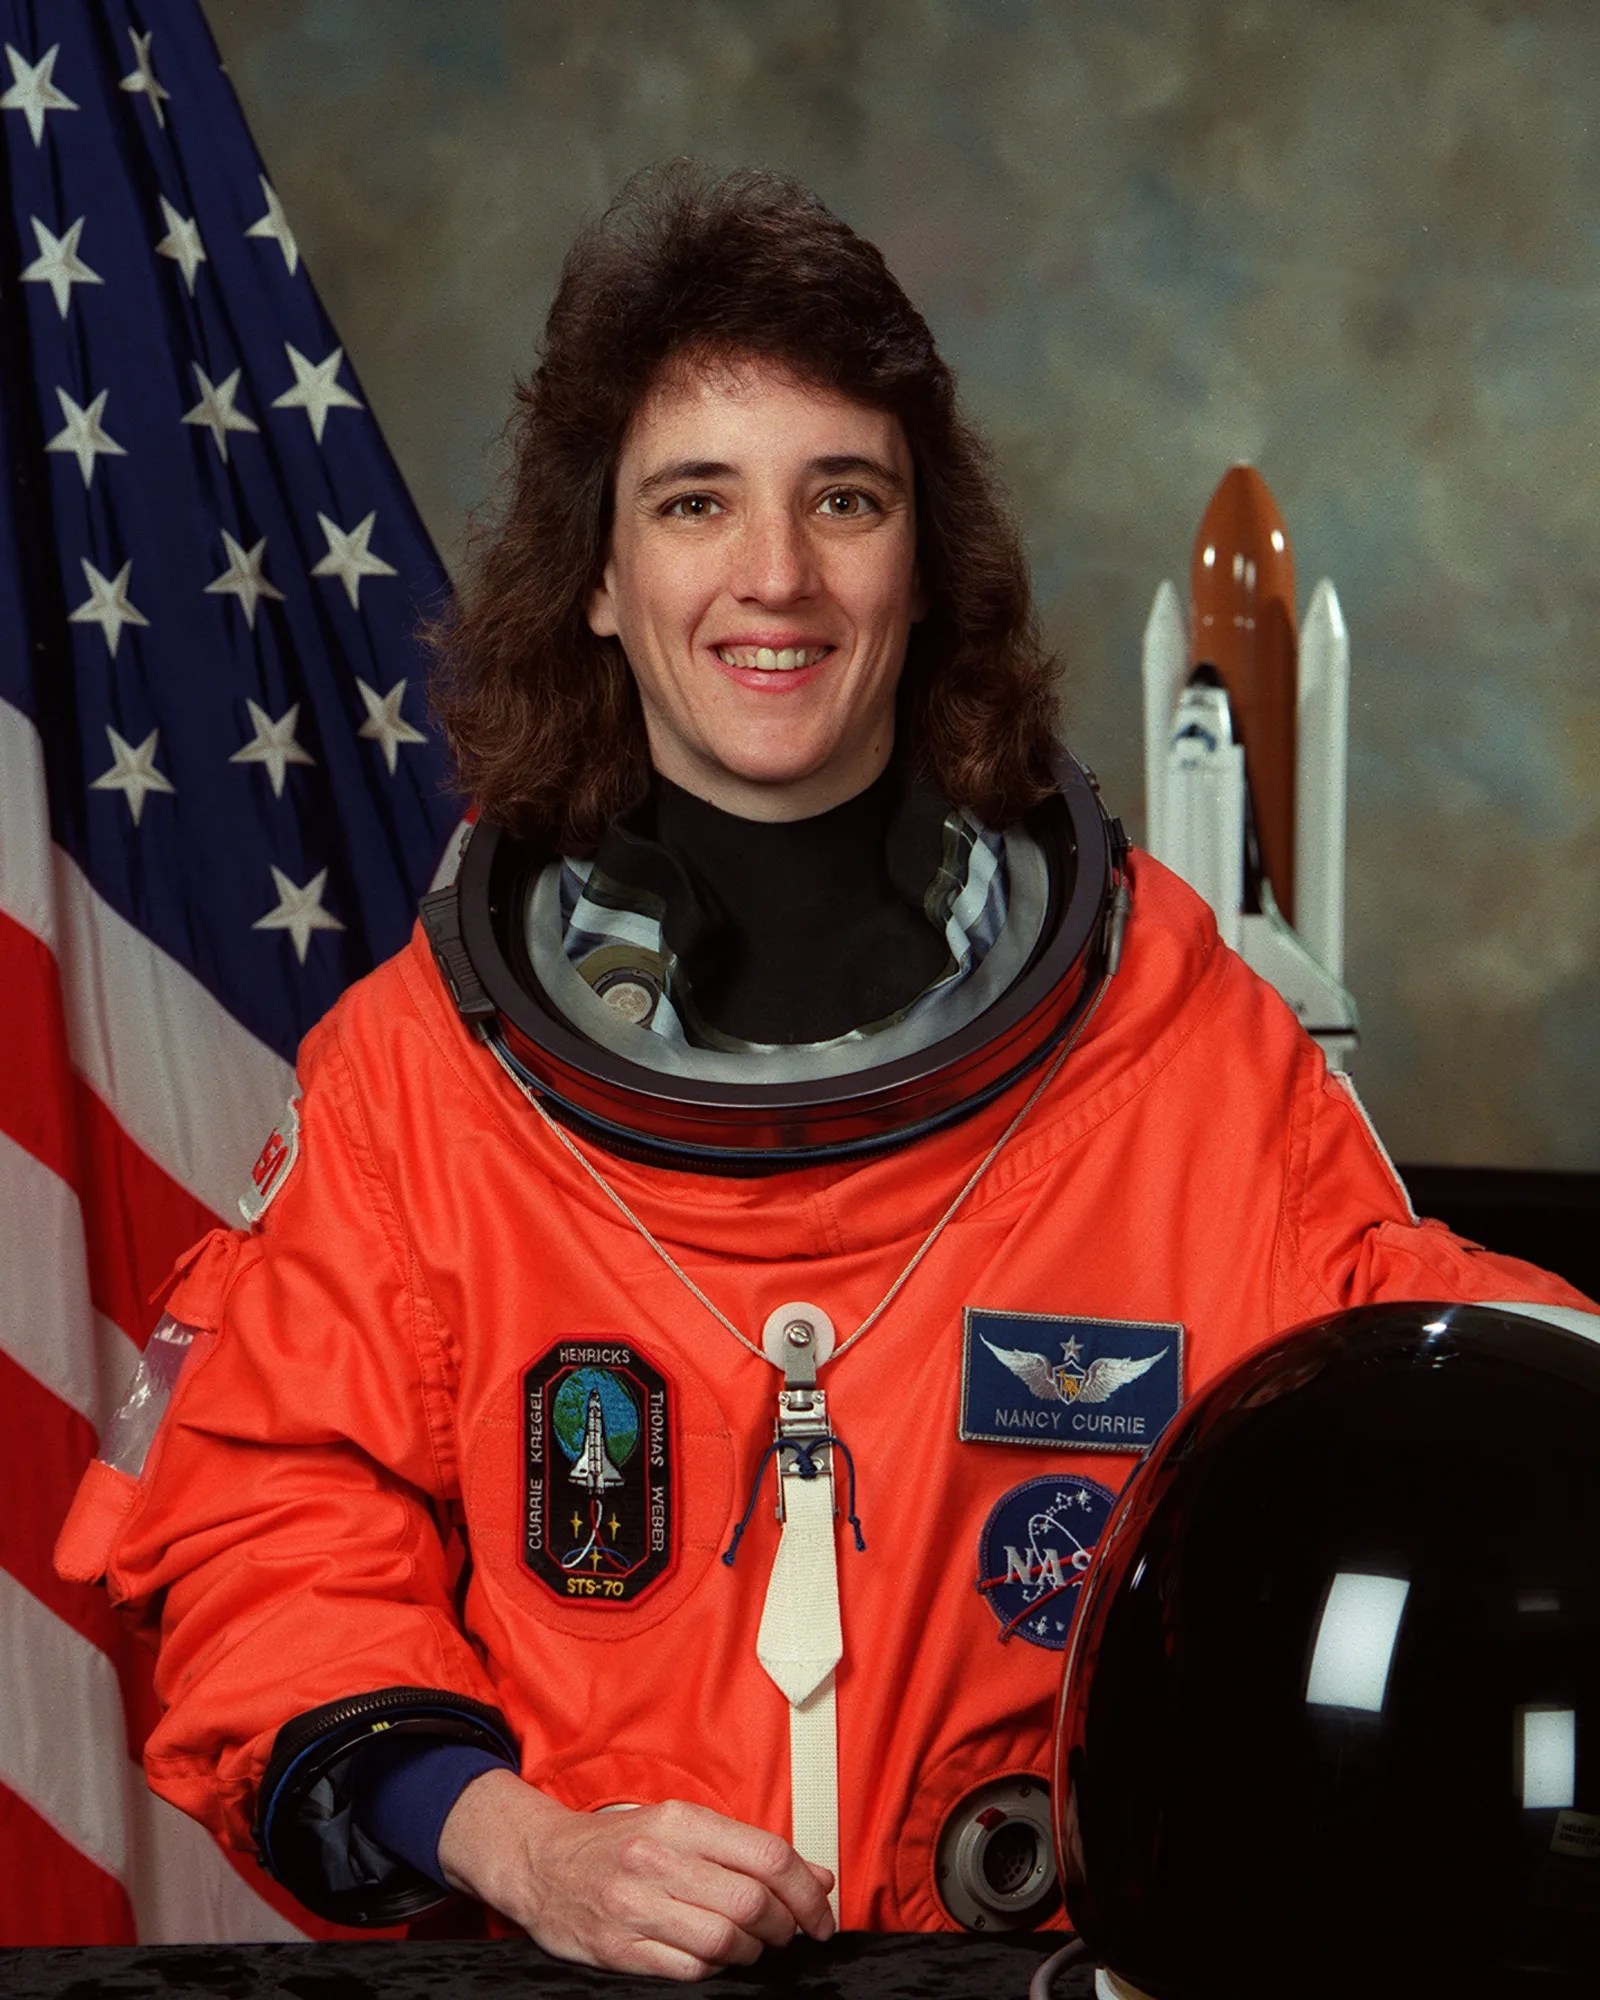 Official astronaut portrait of Nancy Currie.